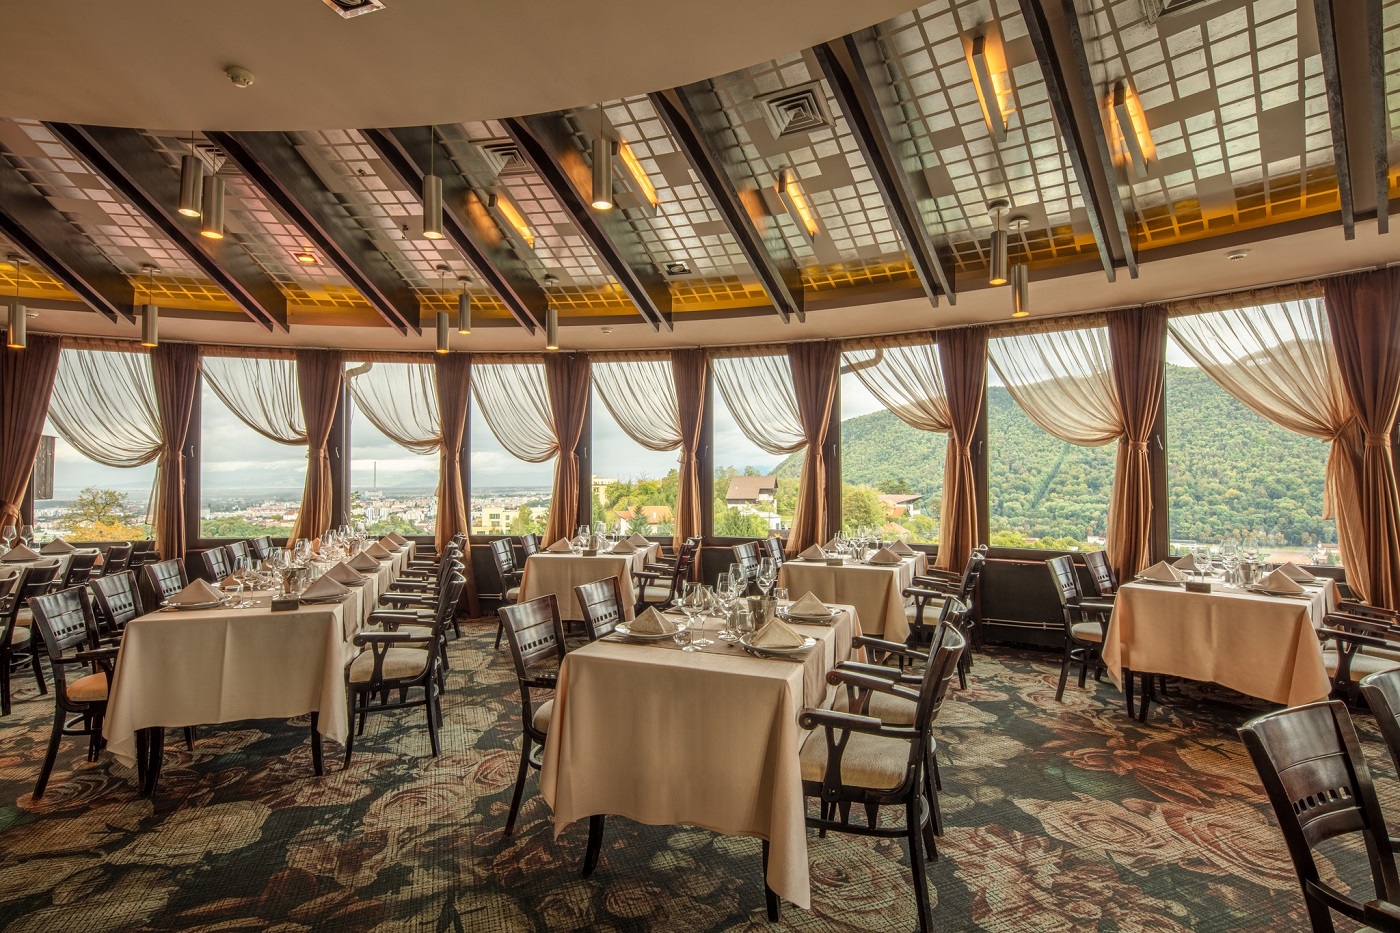 Restaurant Belvedere din Brasov, cu salon circular, cu ferestre mari prin care se vede muntele și orașul, amenajat elegant. Unul din restaurante skybar & rooftops